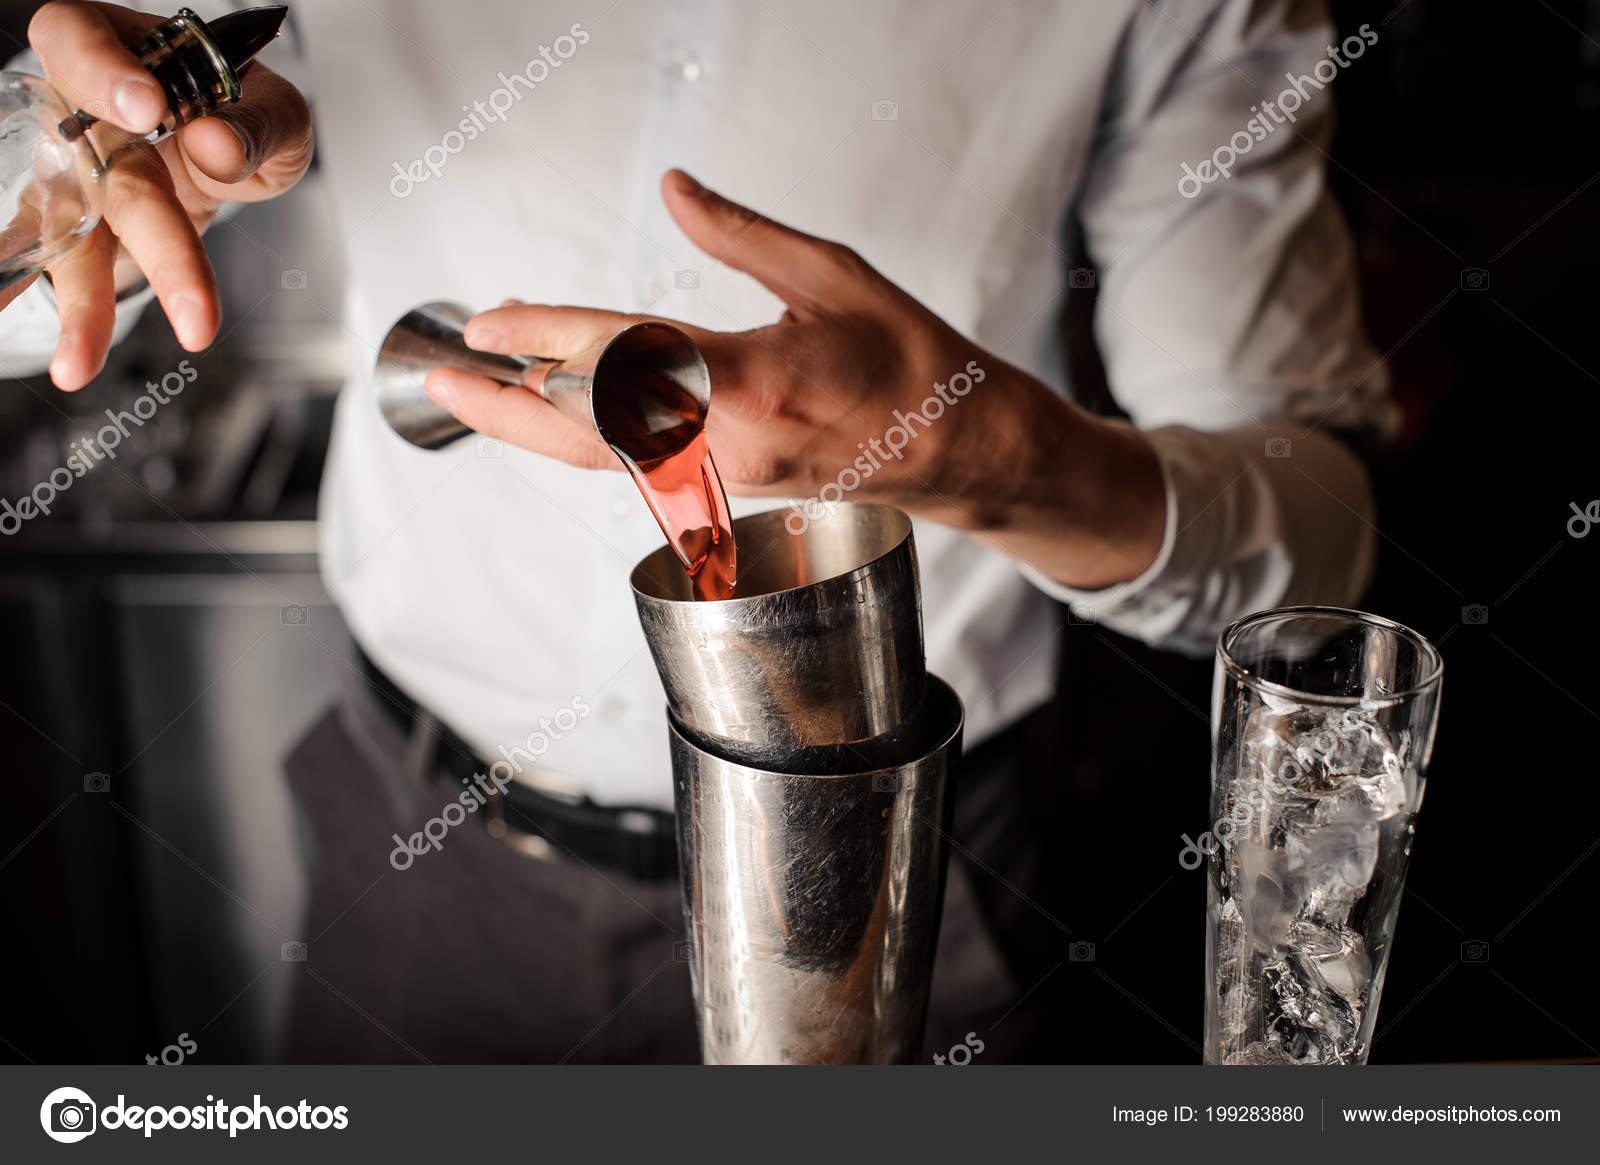 https://st4.depositphotos.com/4079177/19928/i/1600/depositphotos_199283880-stock-photo-bartender-adding-red-alcoholic-drink.jpg